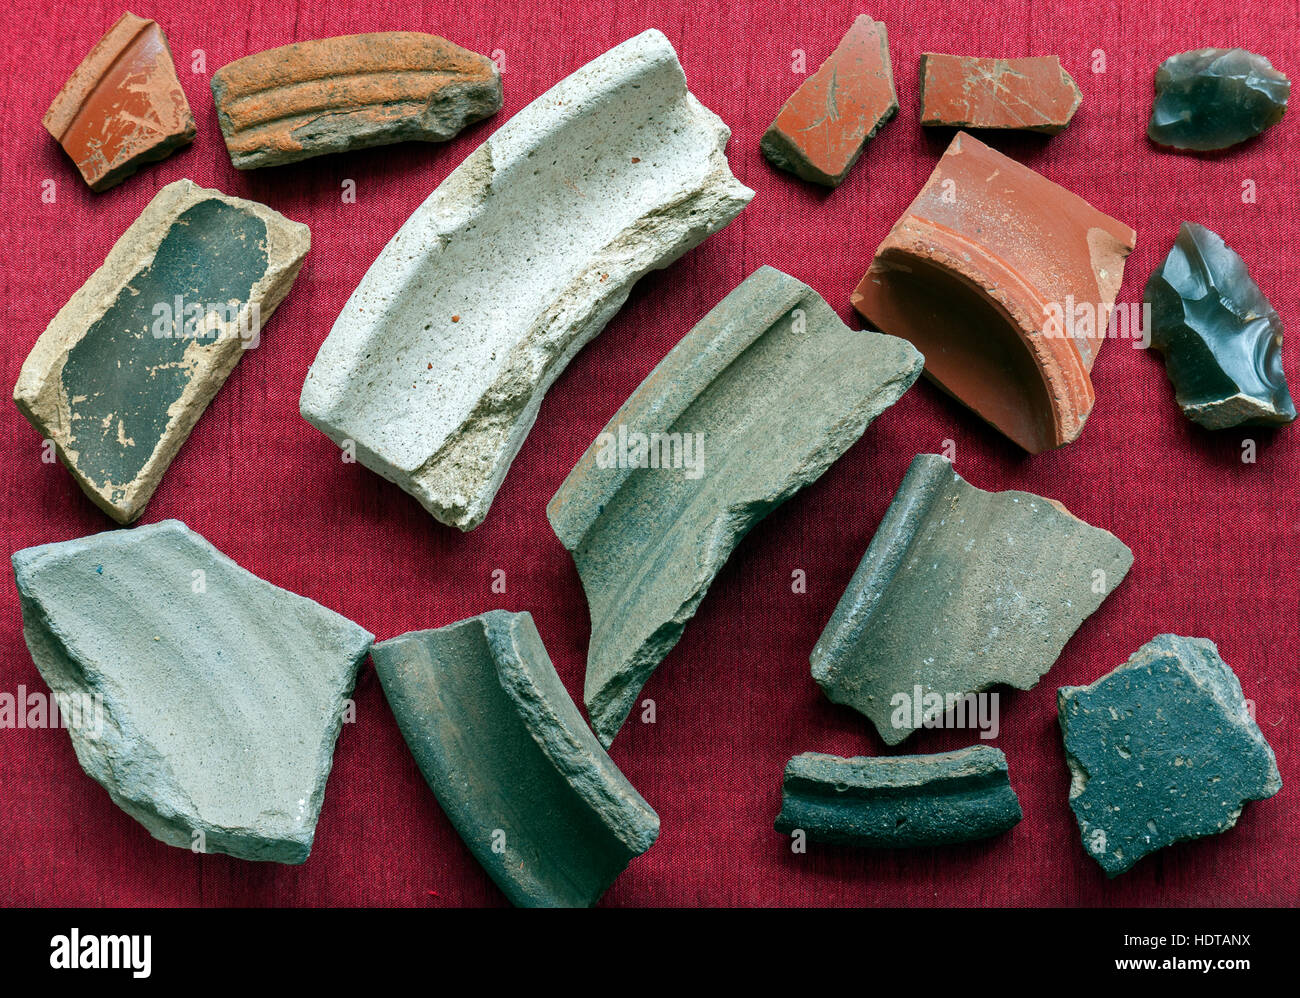 Roman pottery shards and flints found field walking. Stock Photo